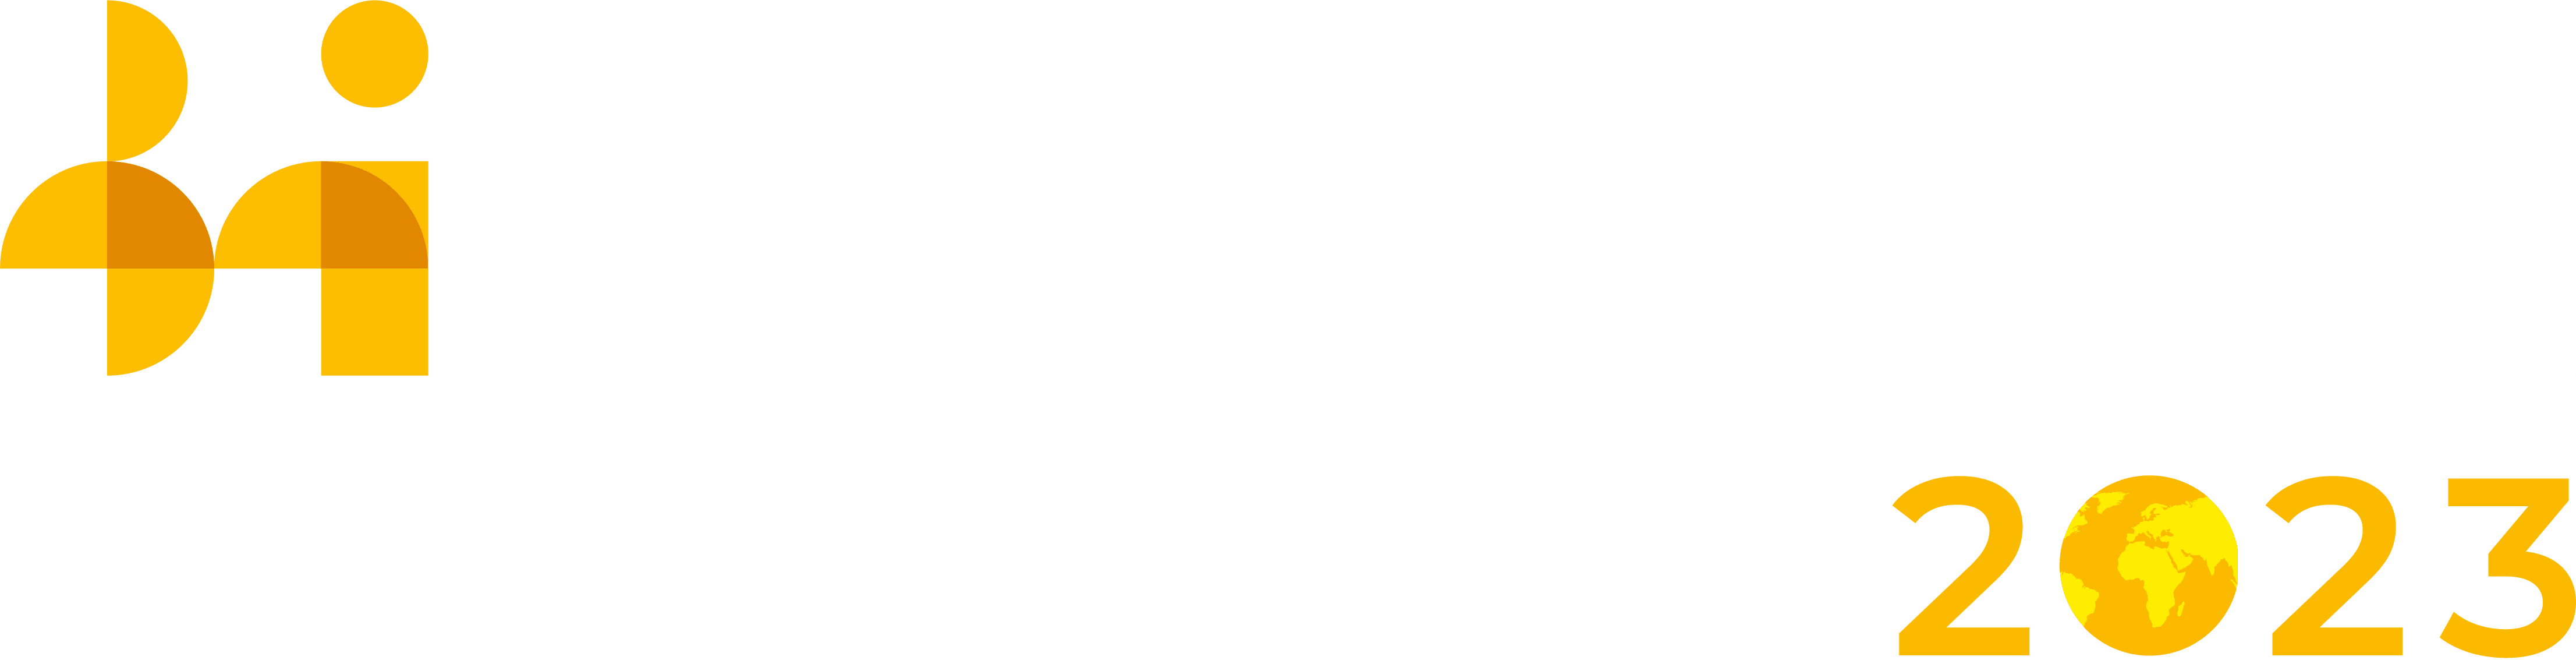 Benchmark World Tour 2023 Toronto Benchmark Mineral Intelligence